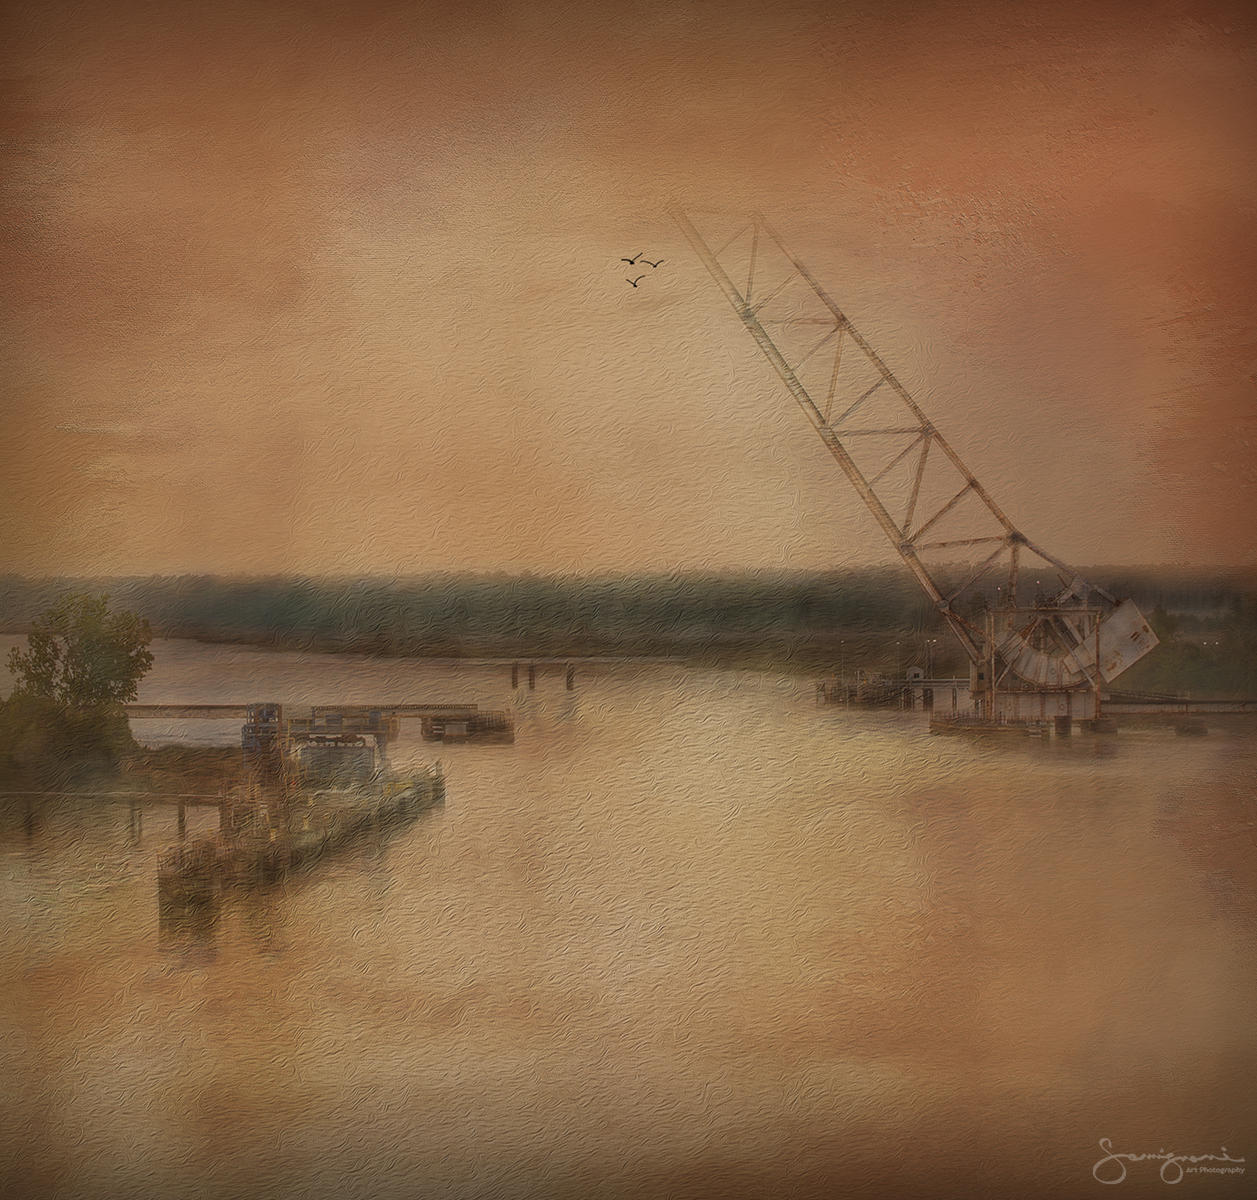 Bridge to Nowhere-
Wilmington, NC